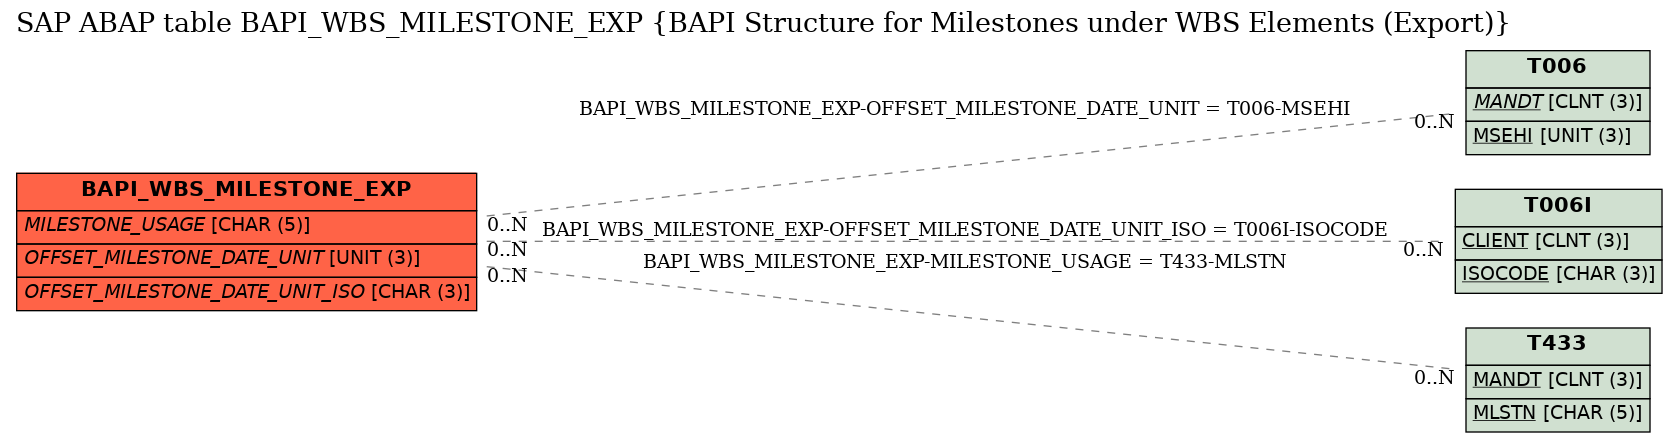 E-R Diagram for table BAPI_WBS_MILESTONE_EXP (BAPI Structure for Milestones under WBS Elements (Export))